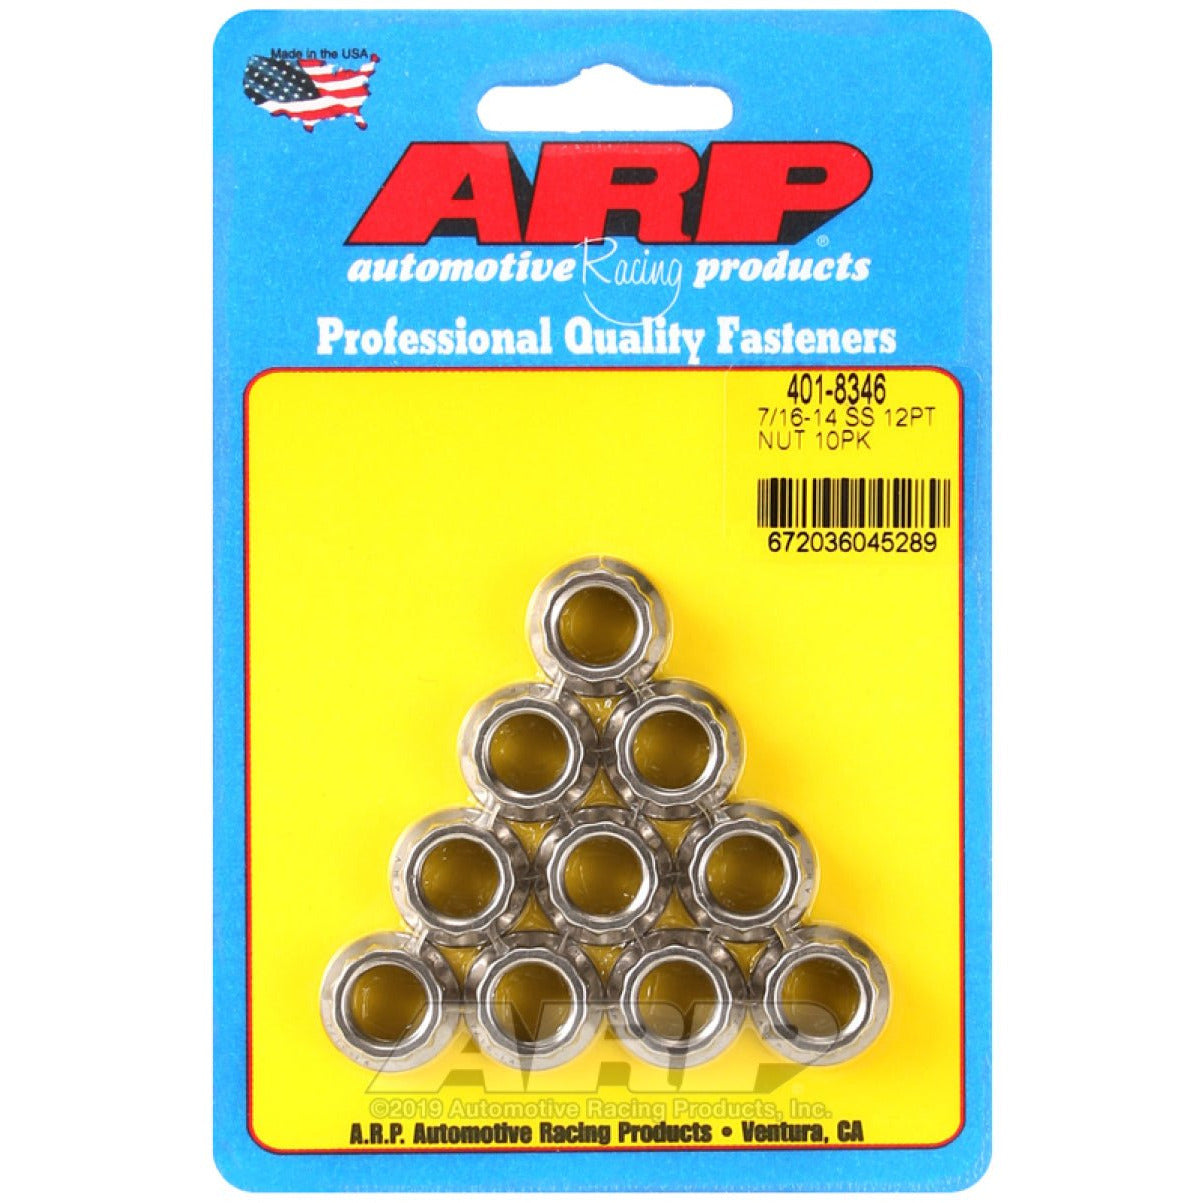 ARP 7/16-14 12PT Nut Kit SS - 10 PK ARP Hardware Kits - Other